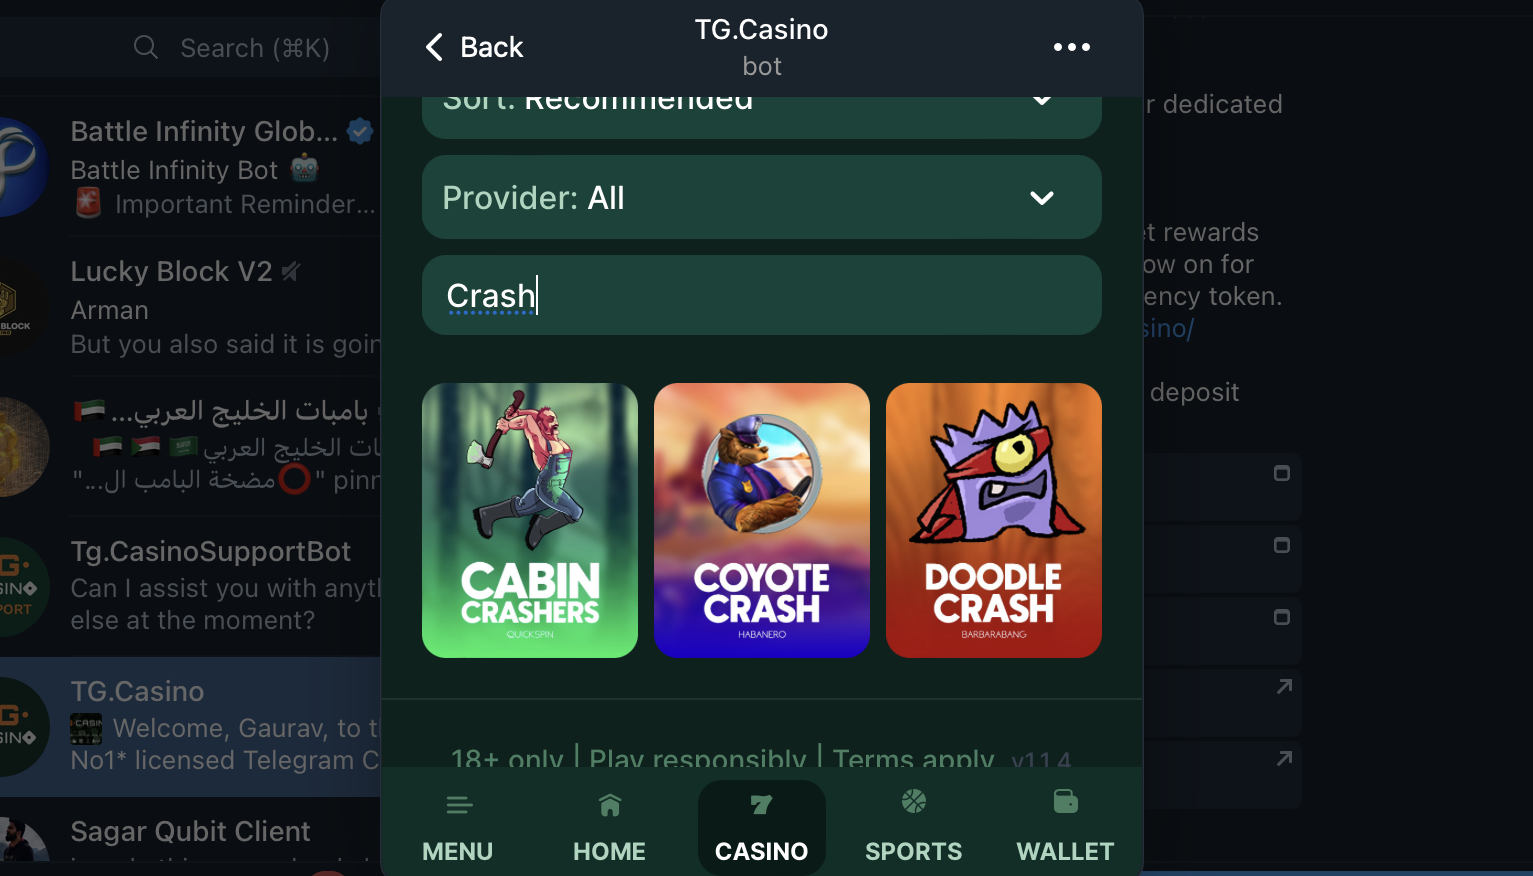 TG.Casino - Crash Gambling Site on Telegram